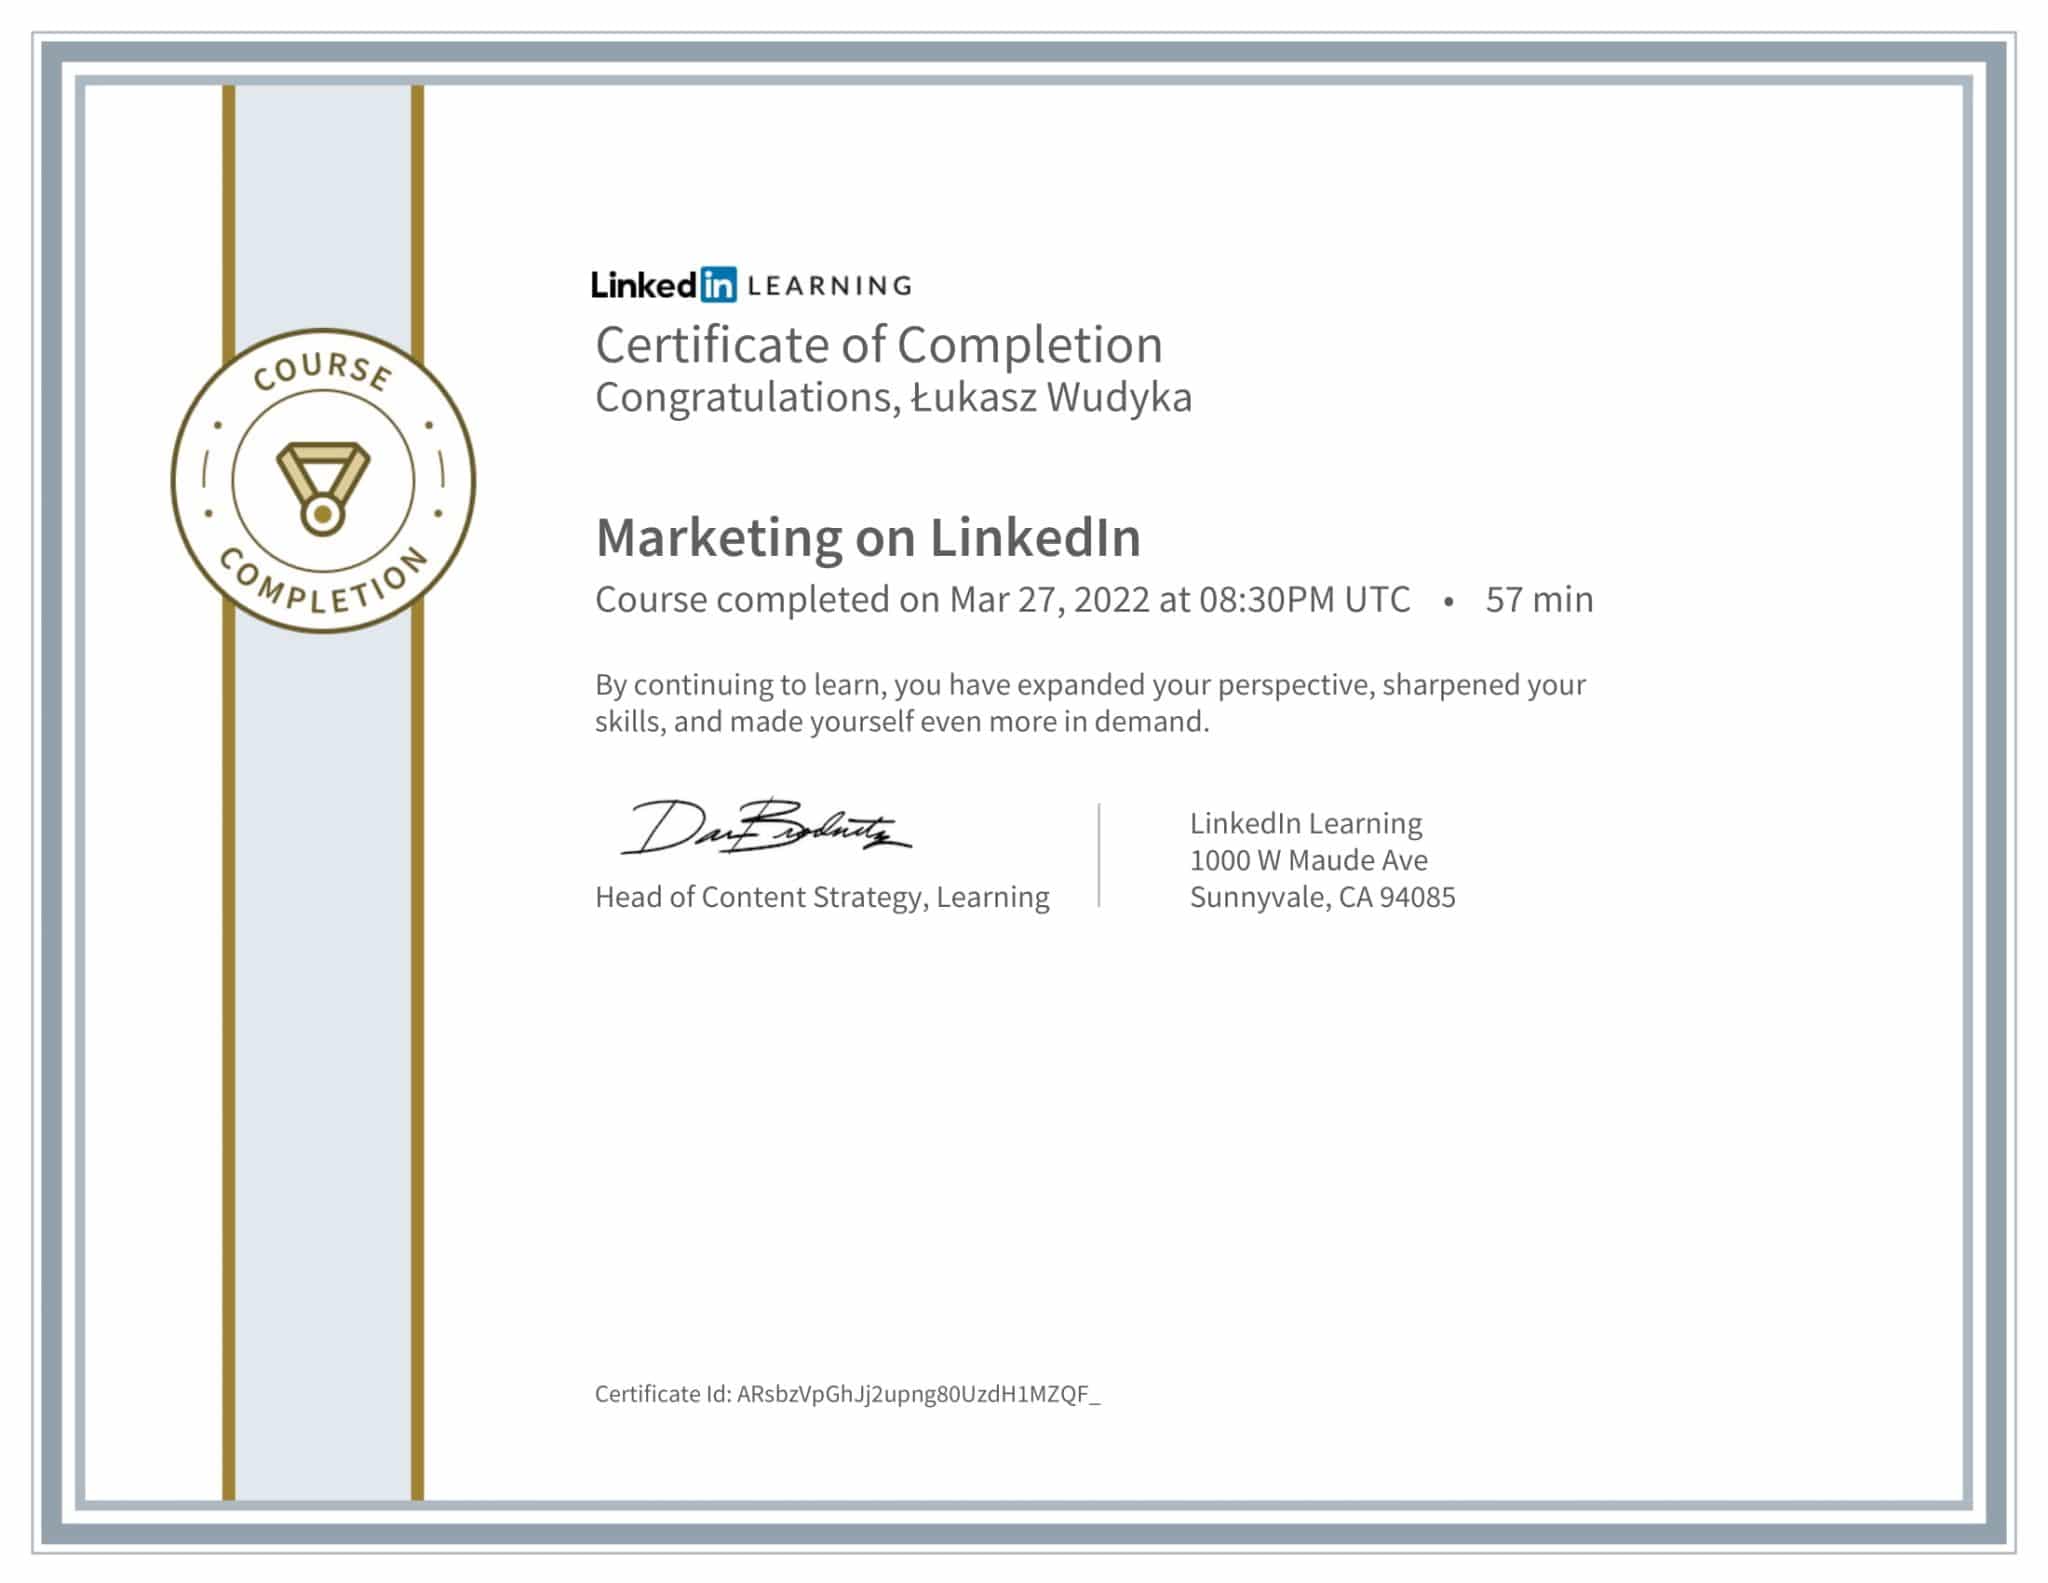 CertificateOfCompletion_Marketing on LinkedIn-1